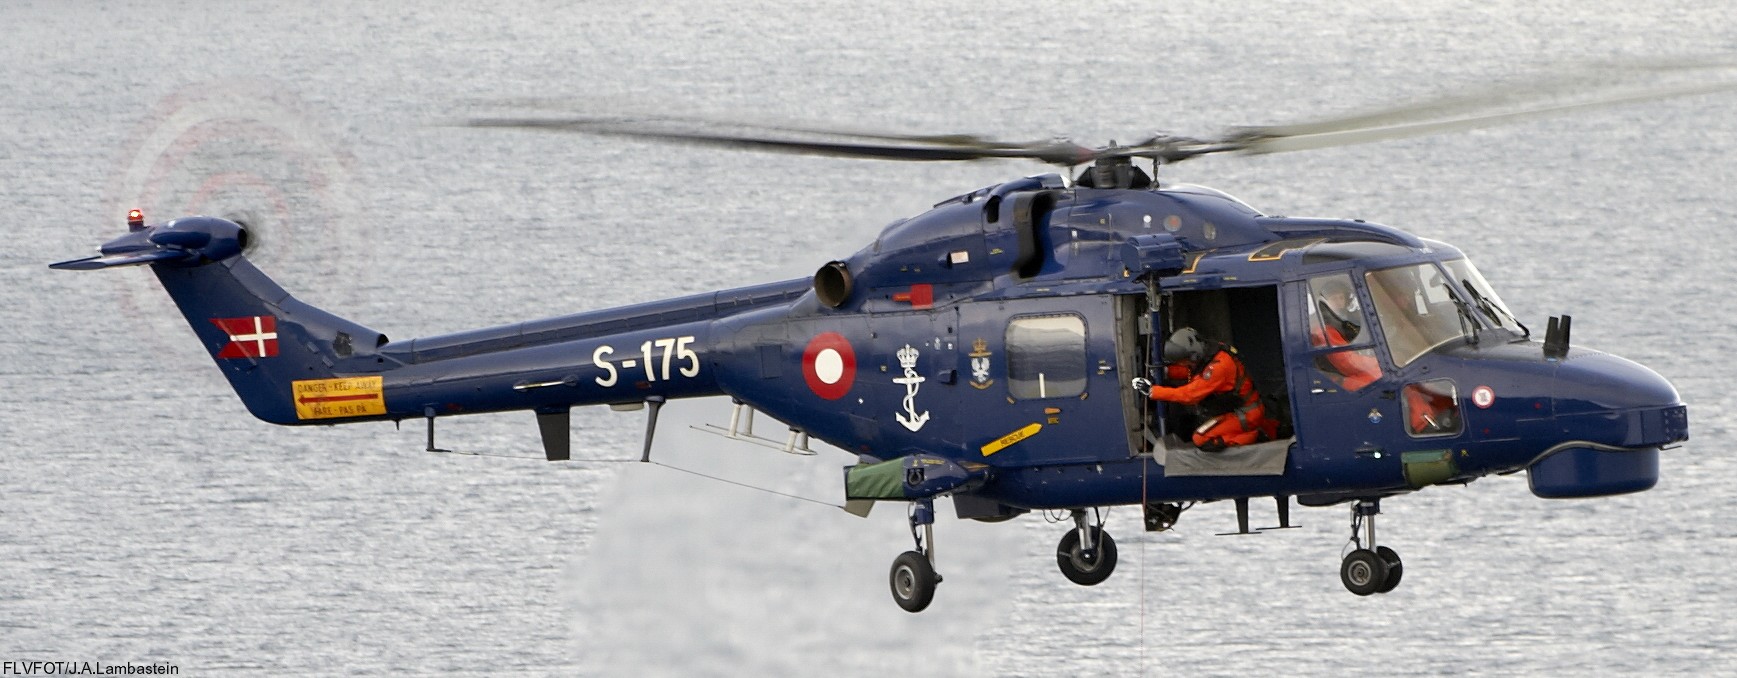 lynx mk.80 mk.90b helicopter westland royal danish navy air force kongelige danske marine flyvevabnet s-175 19